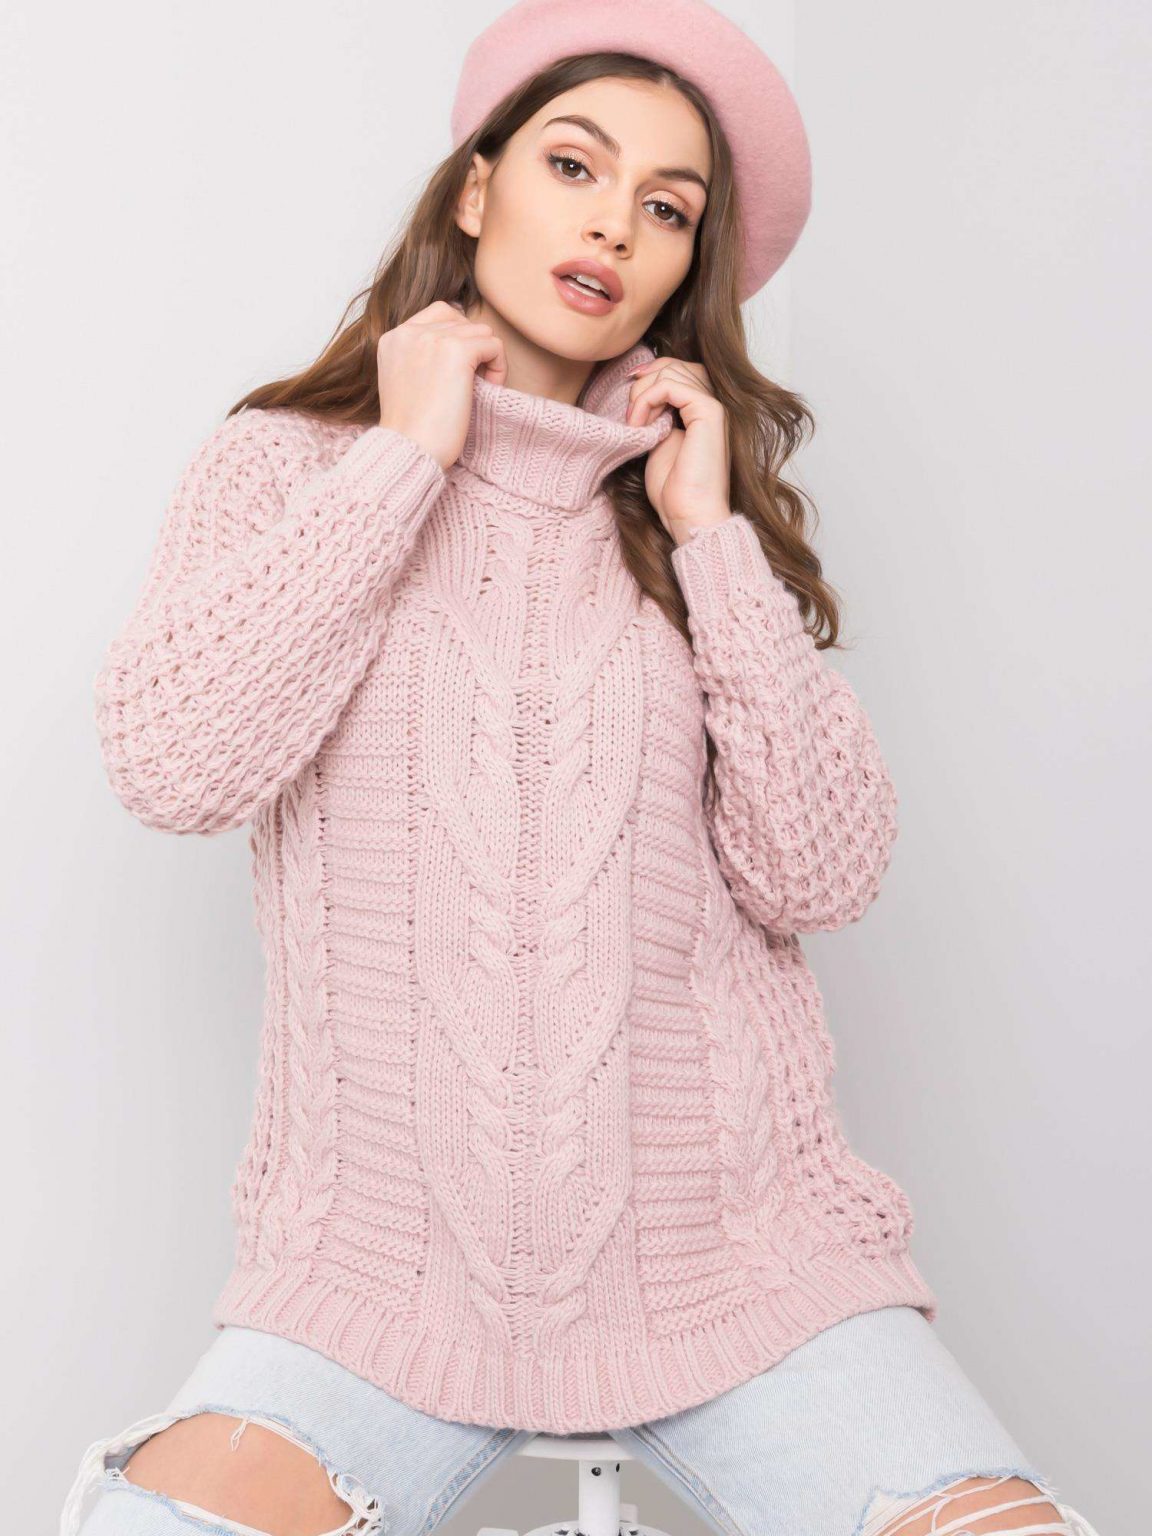 Brudnoróżowy sweter Colleen